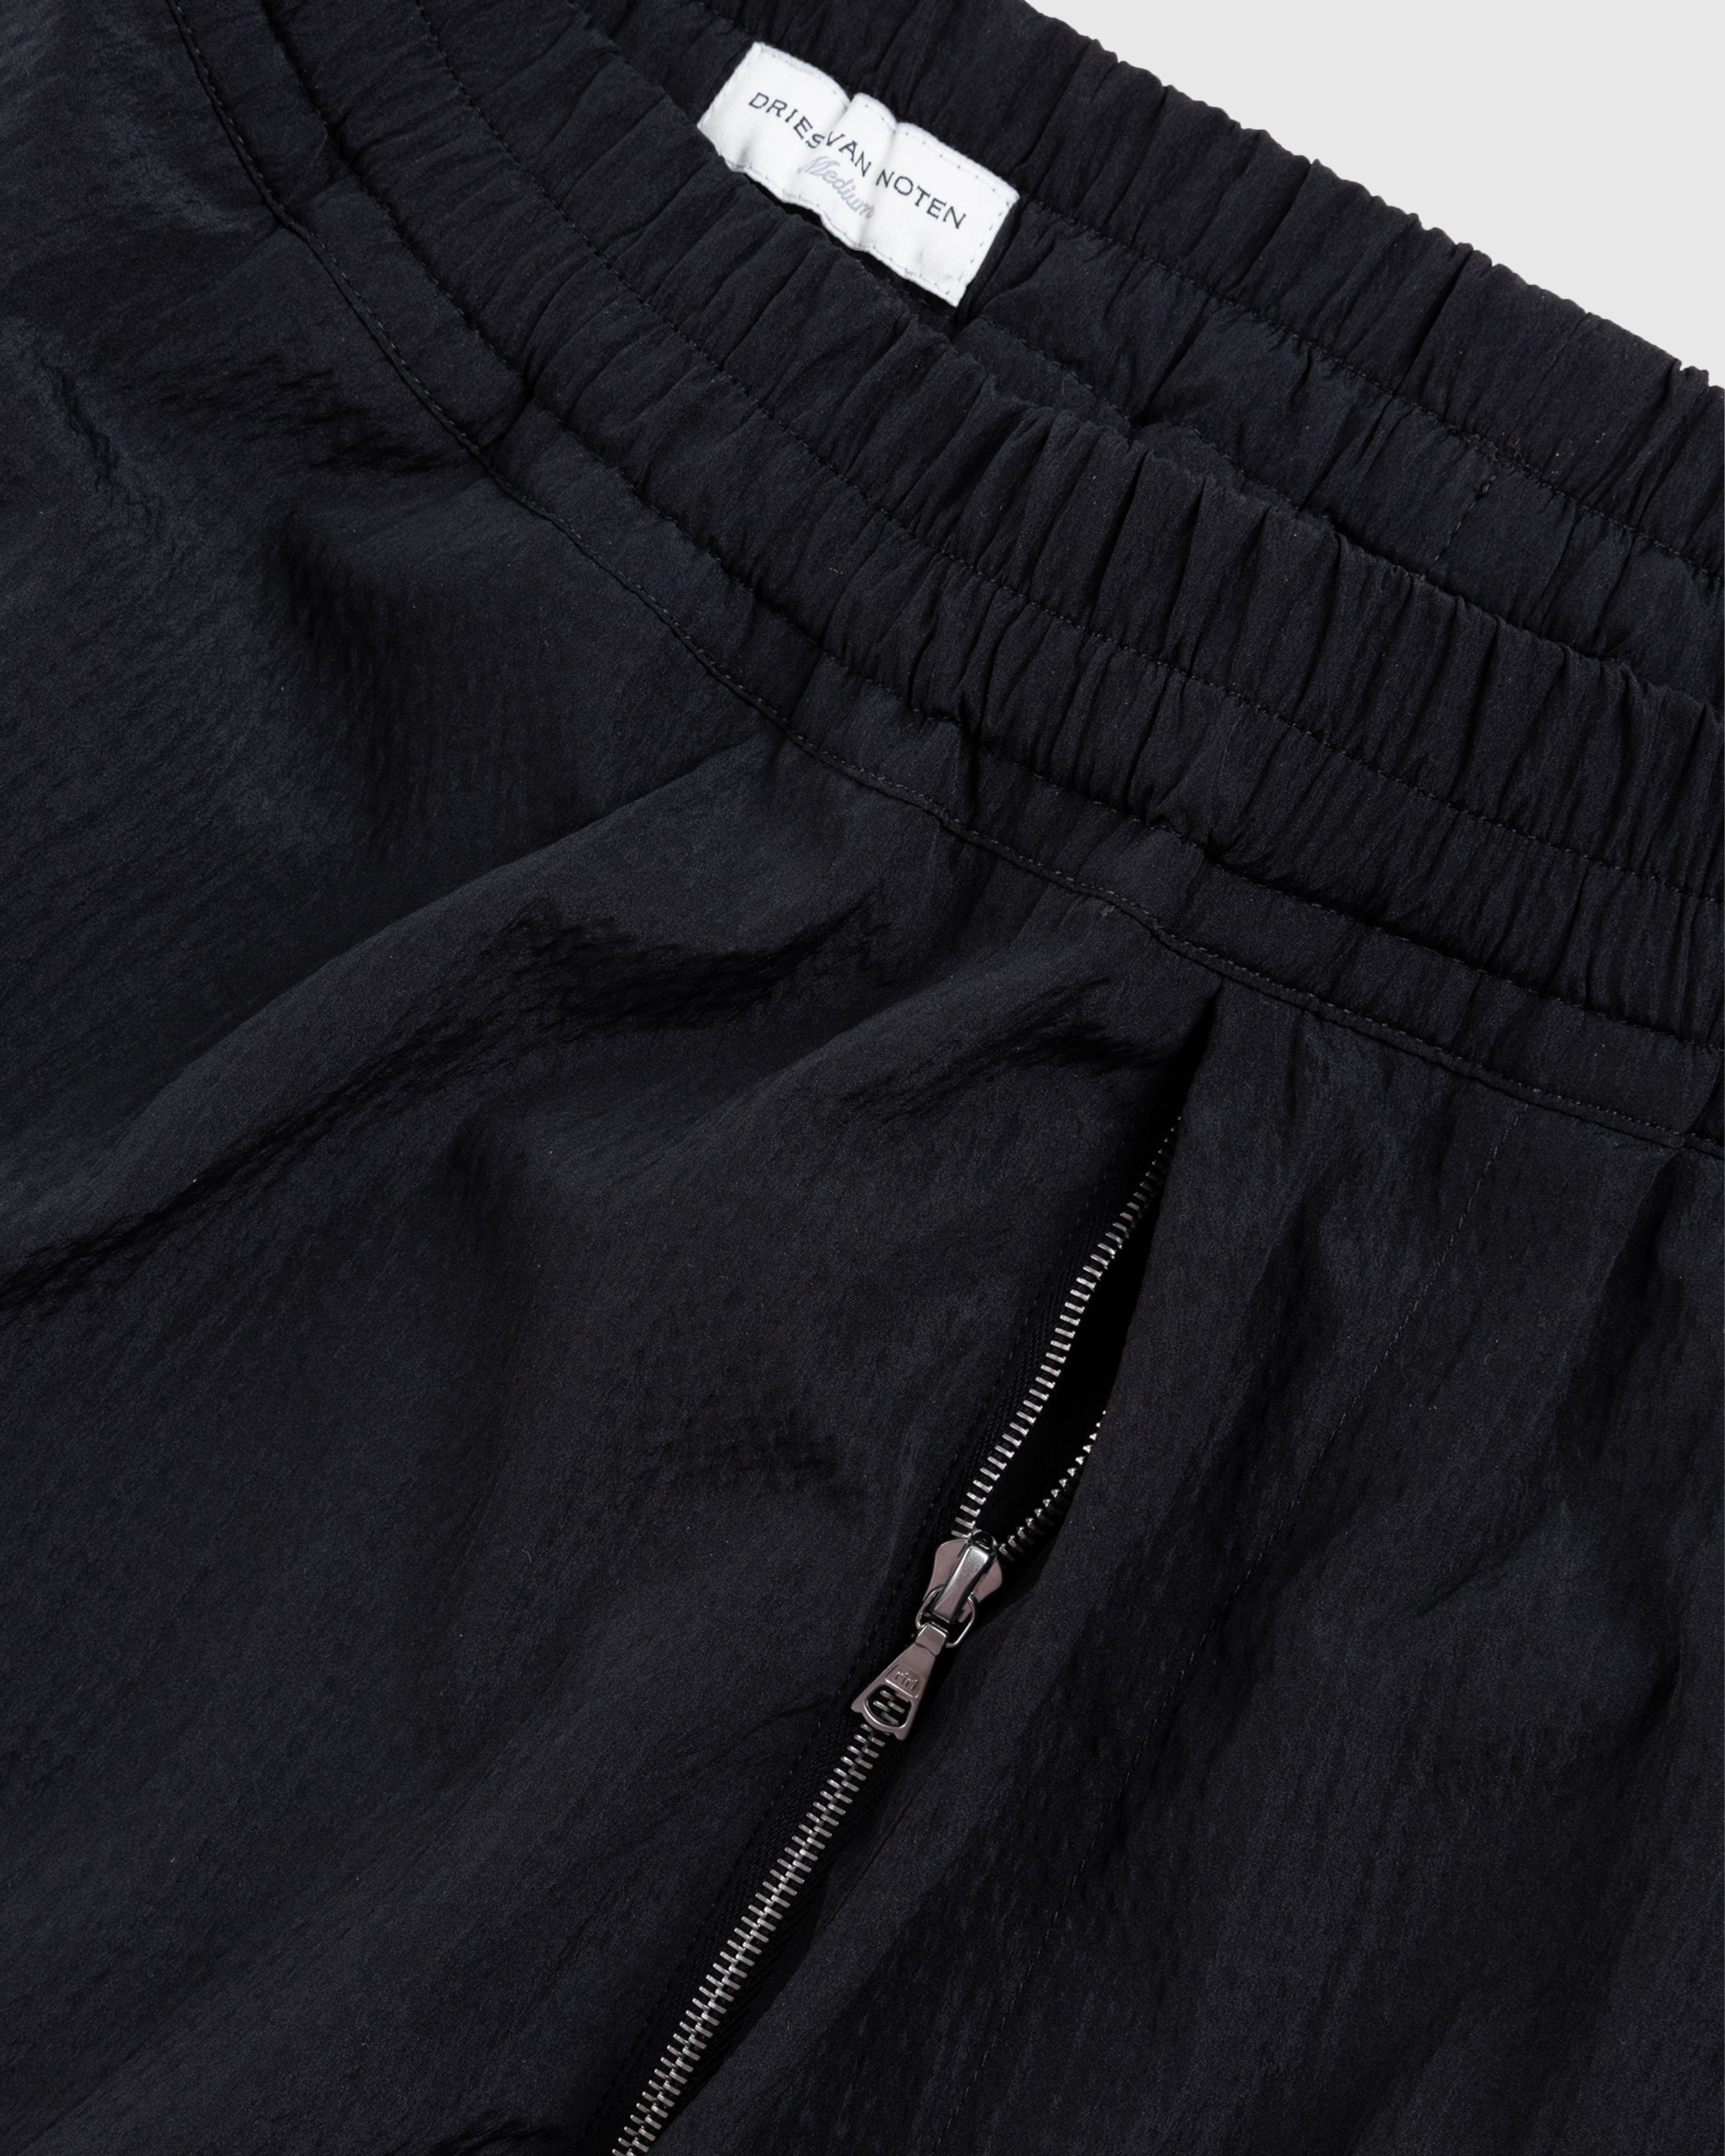 Dries van Noten - Portby Tris Pants Black - Clothing - Black - Image 5